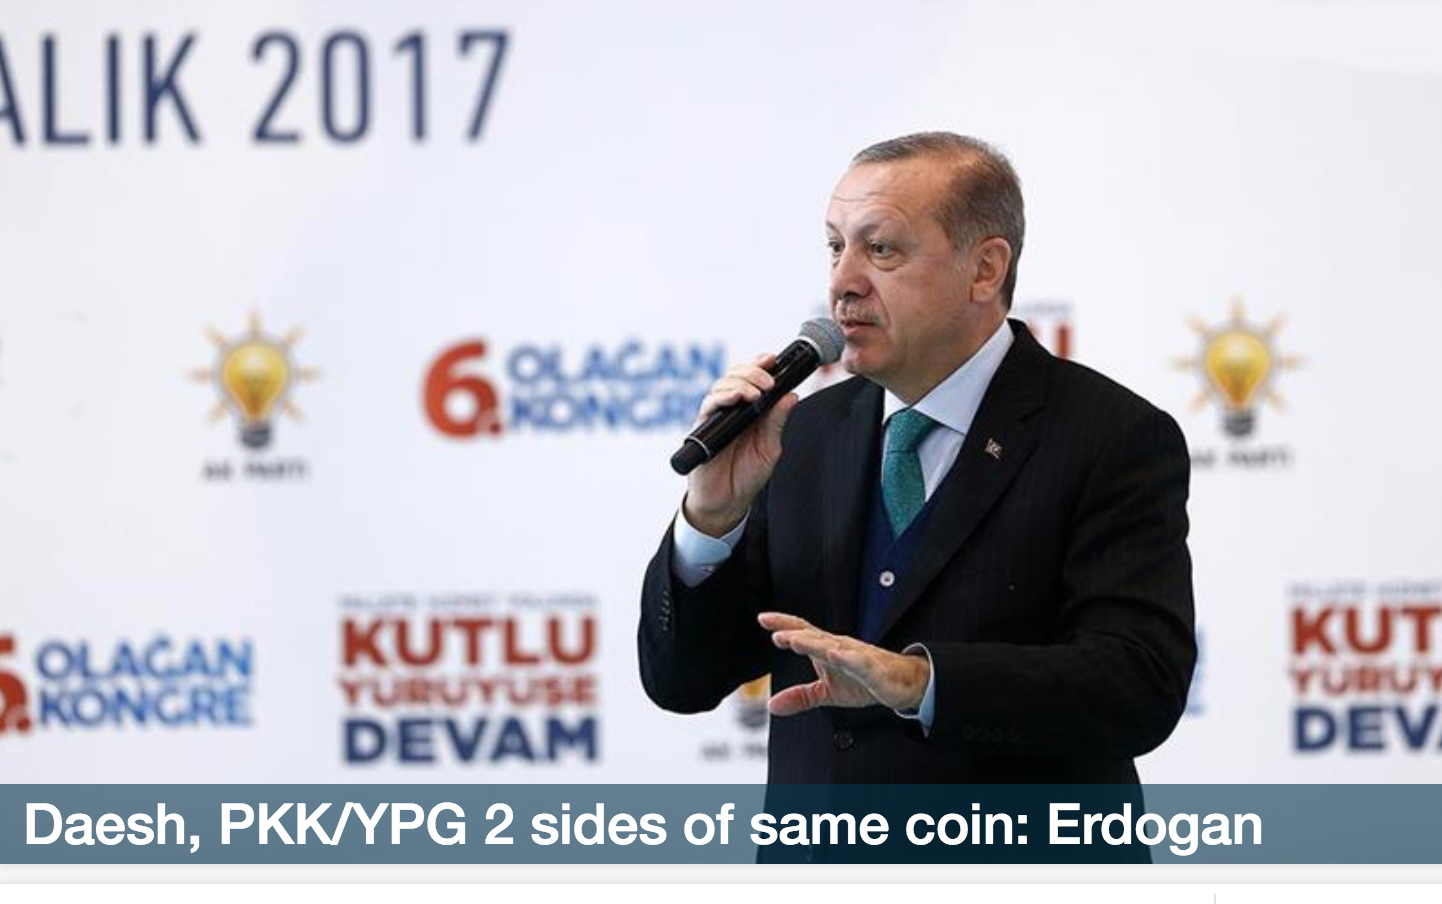 Daesh, PKK/YPG 2 sides of same coin: Erdogan